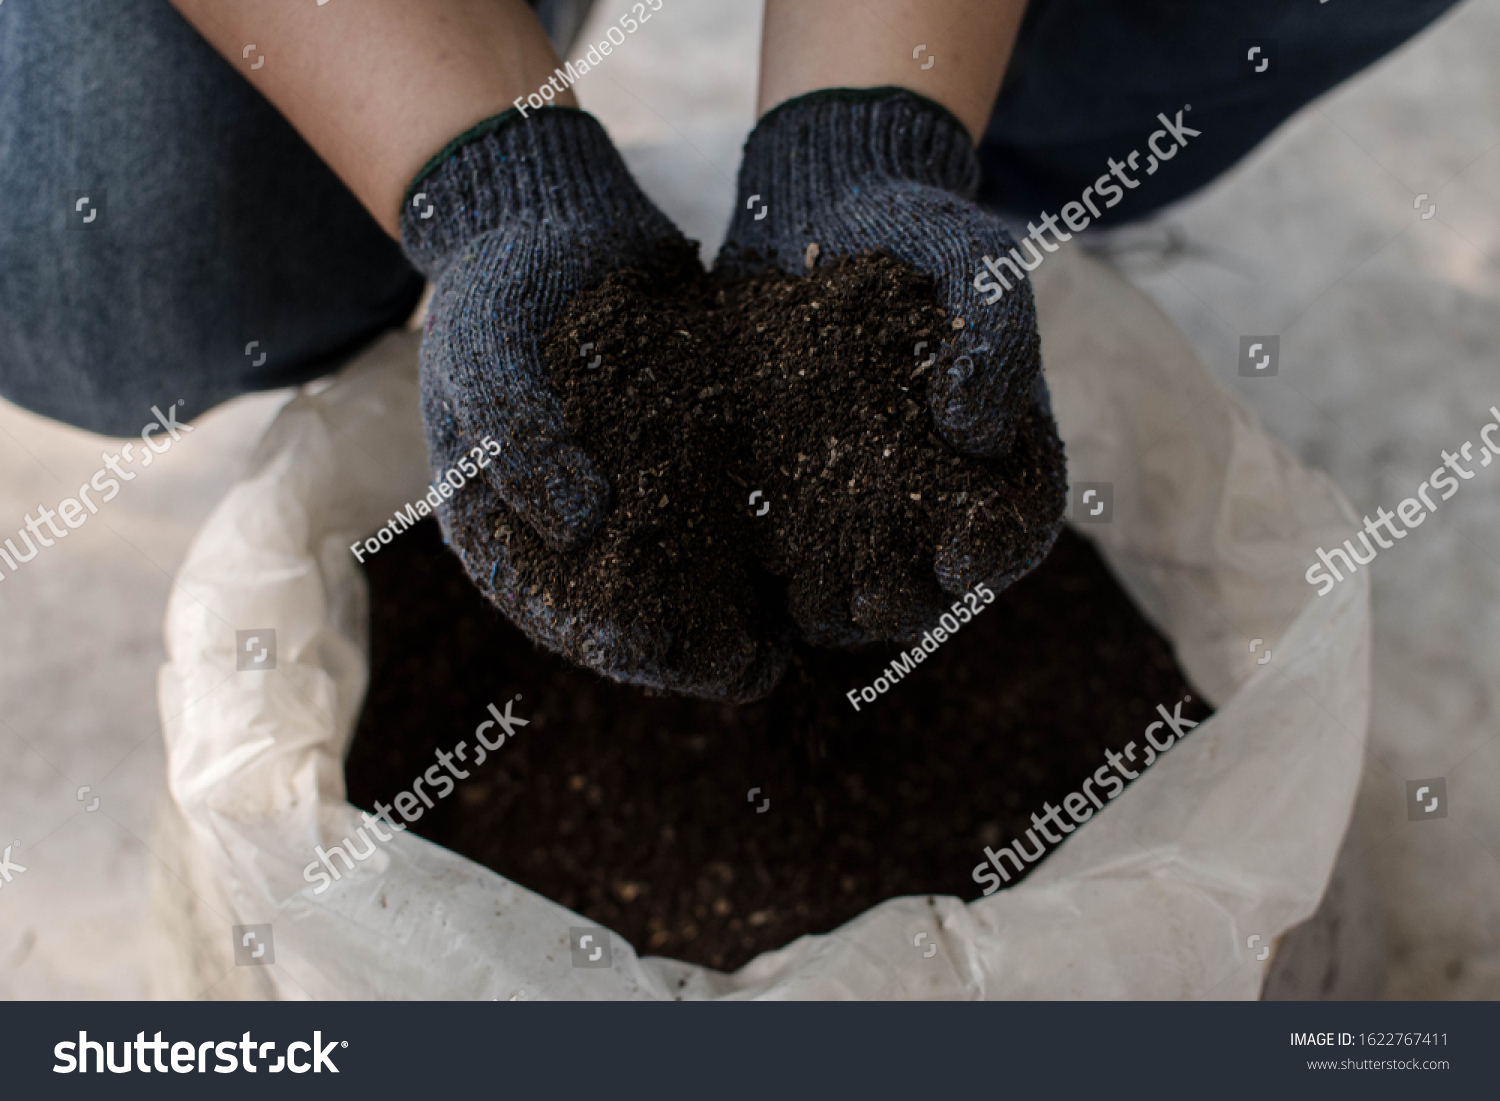 Hand holding organic fertilizer background. Organic fertilizer for organic fruits and vegetables. #1622767411